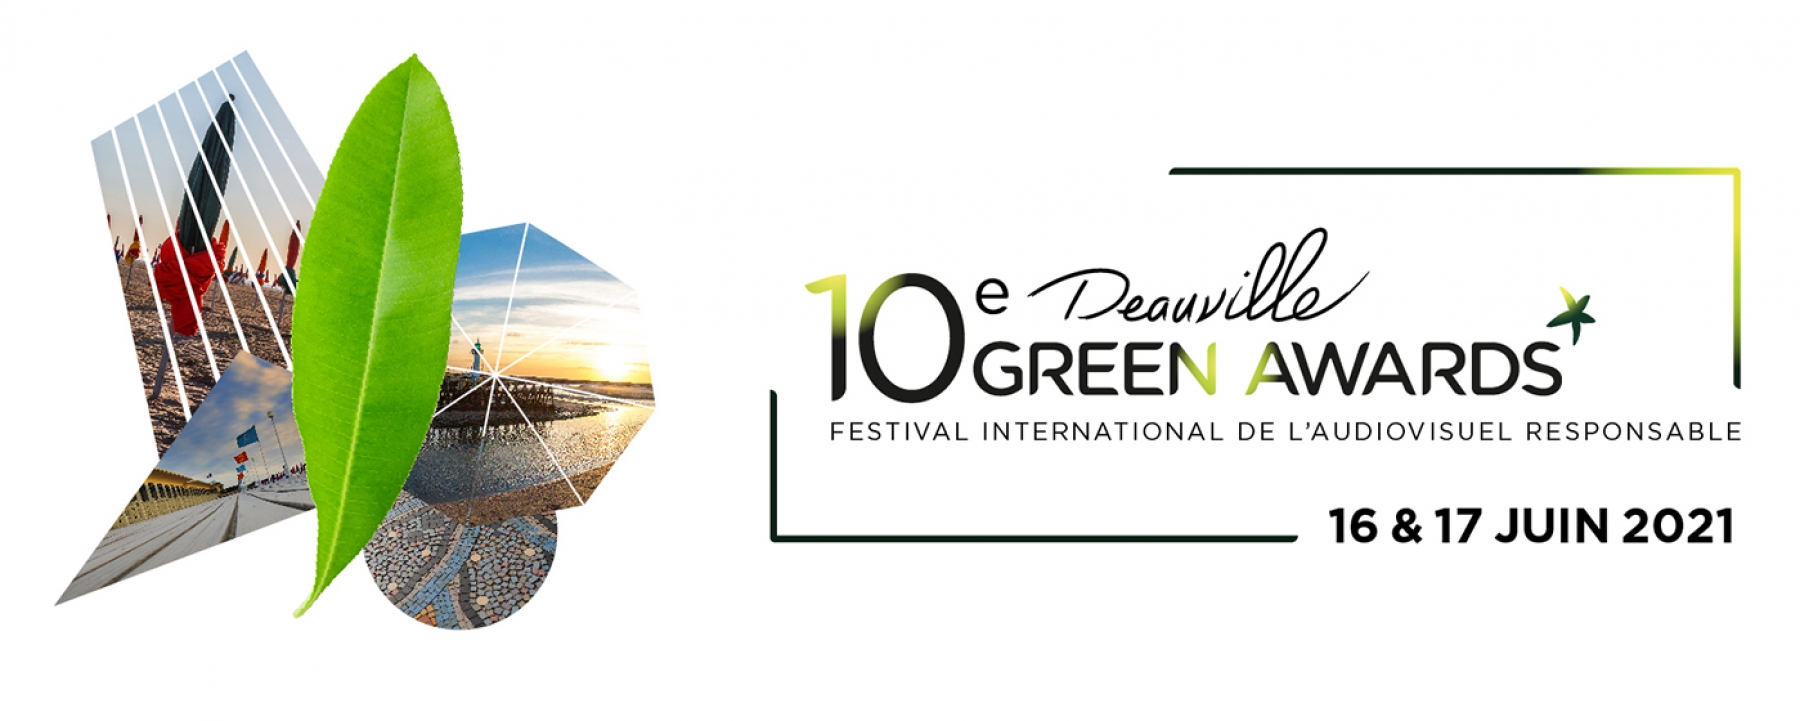 Deauville Green Awards 2021, organisé du 16 au 17 juin 2021